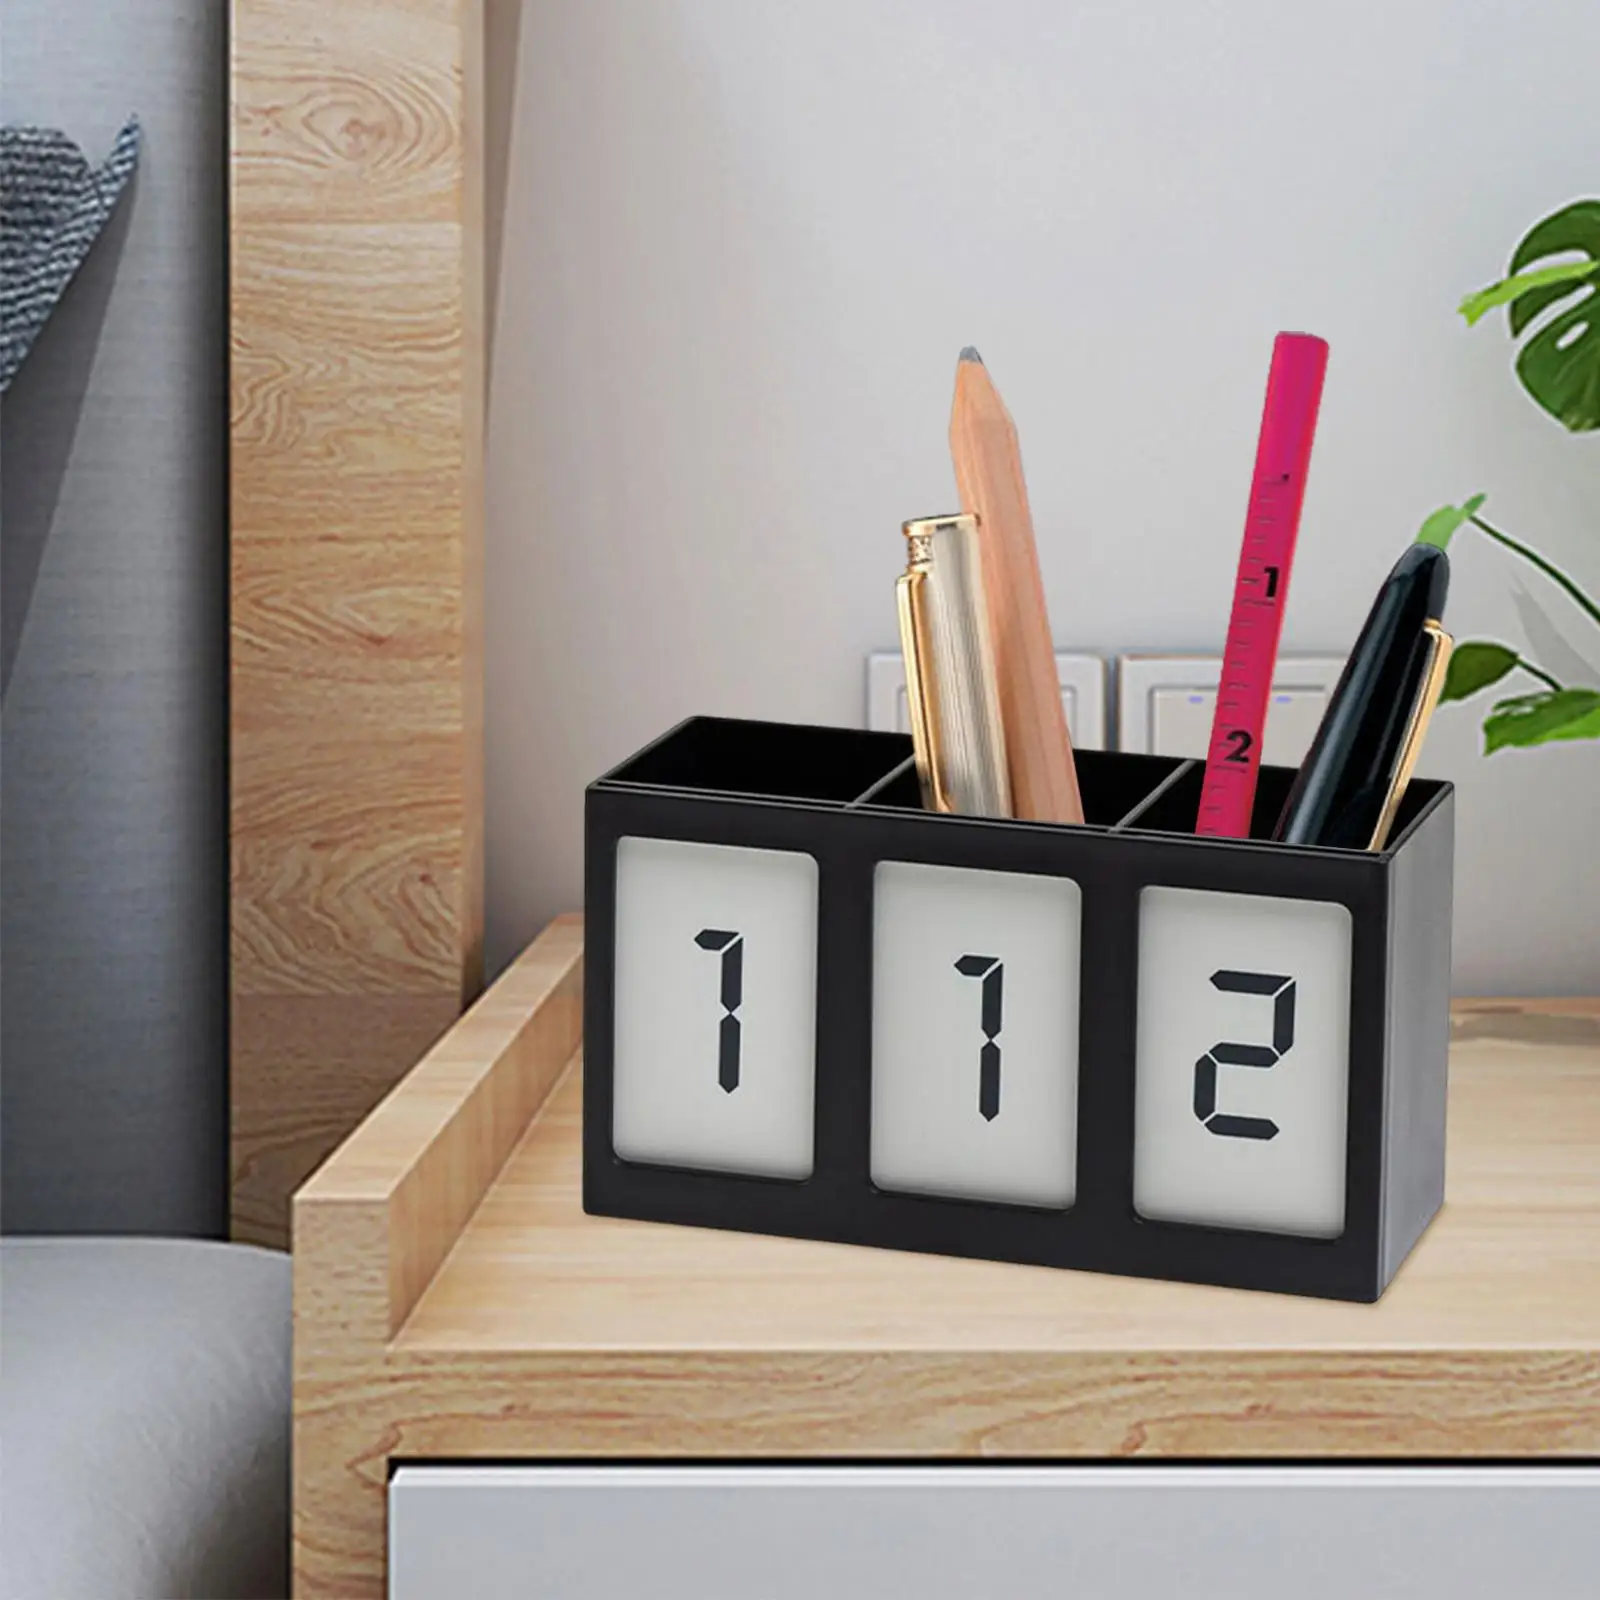 3 Slot Pen Barrel Decorative Novelty Makeup Brush Holders Container for Office Desk Dorm Countertop Tabletop Bedroom